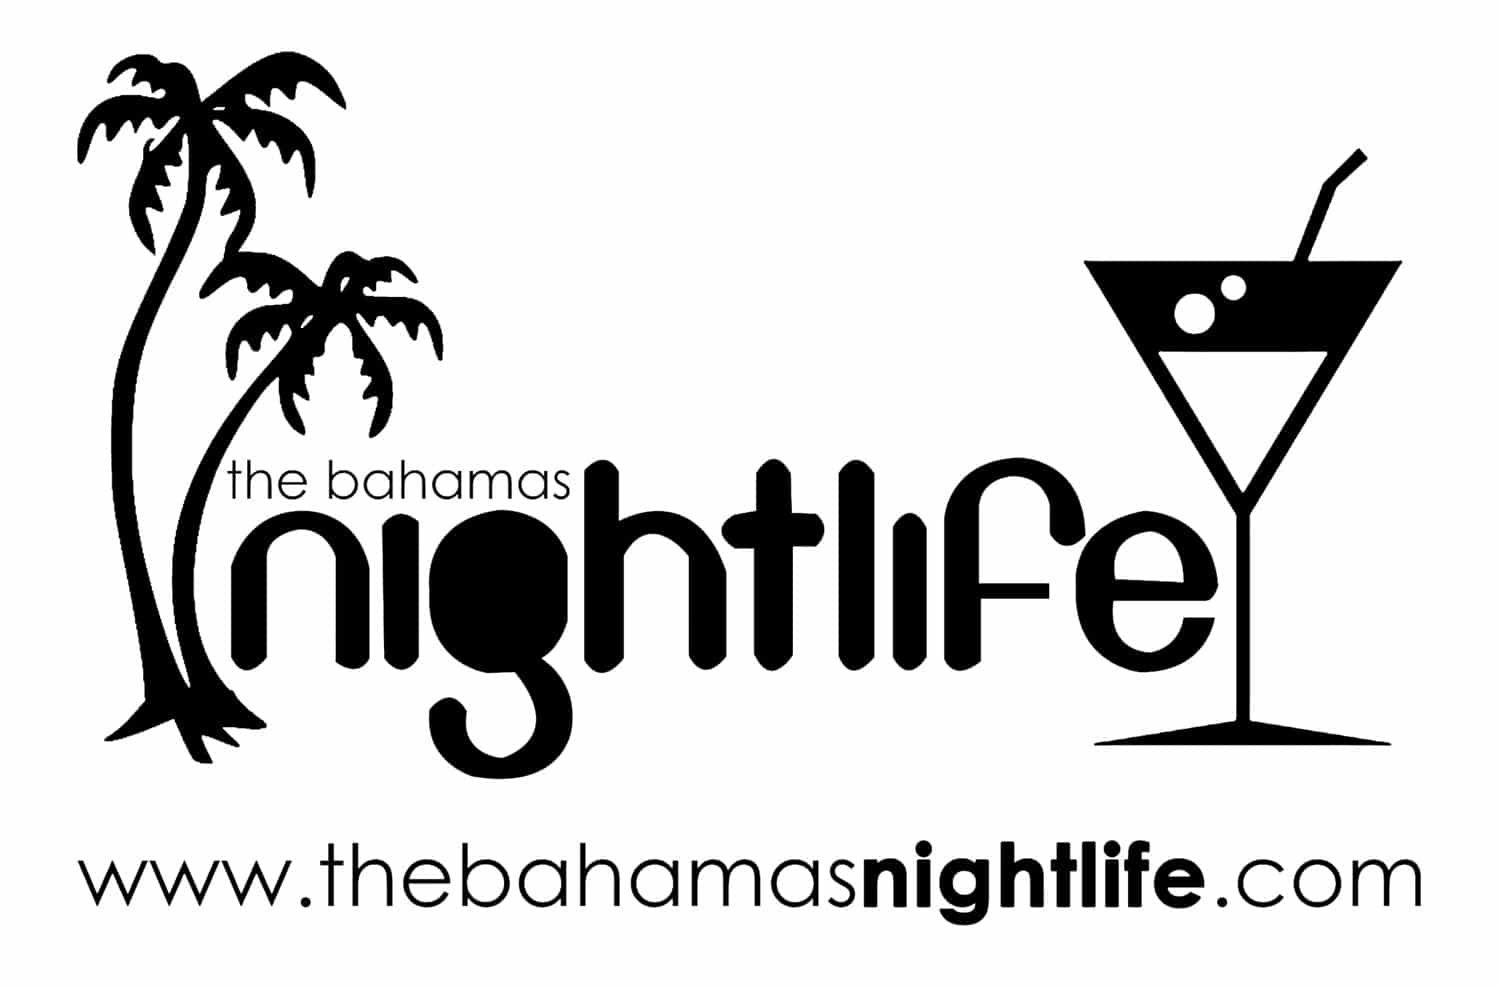 The Bahamas Nightlife